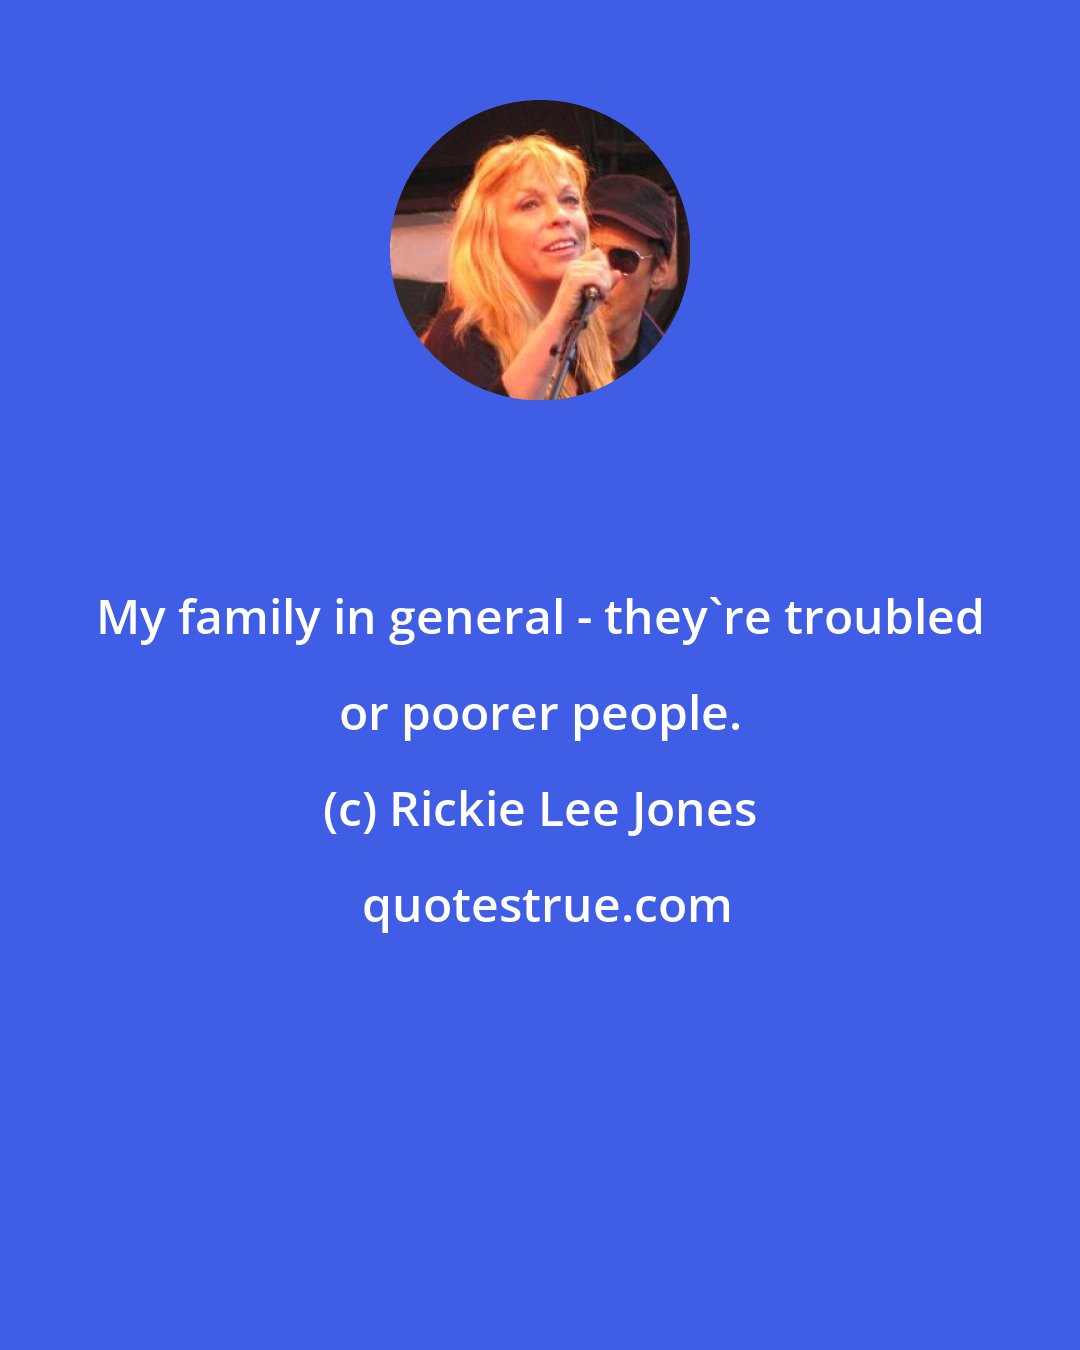 Rickie Lee Jones: My family in general - they're troubled or poorer people.